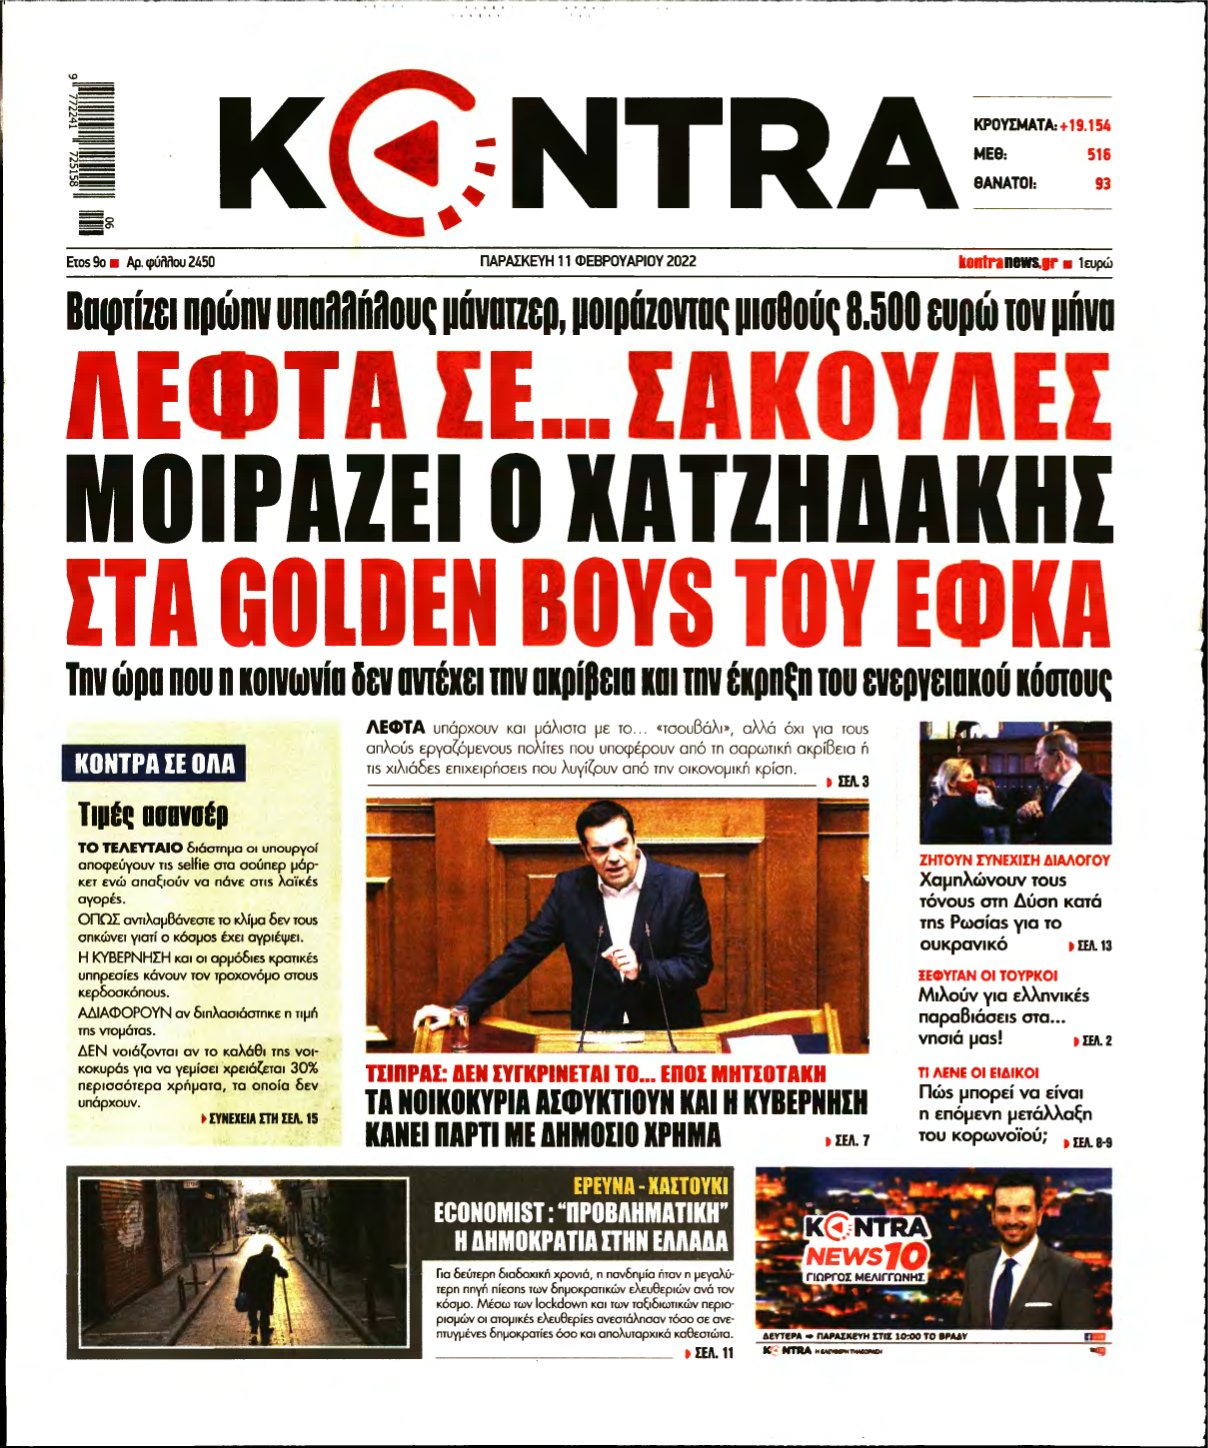 KONTRA NEWS – 11/02/2022